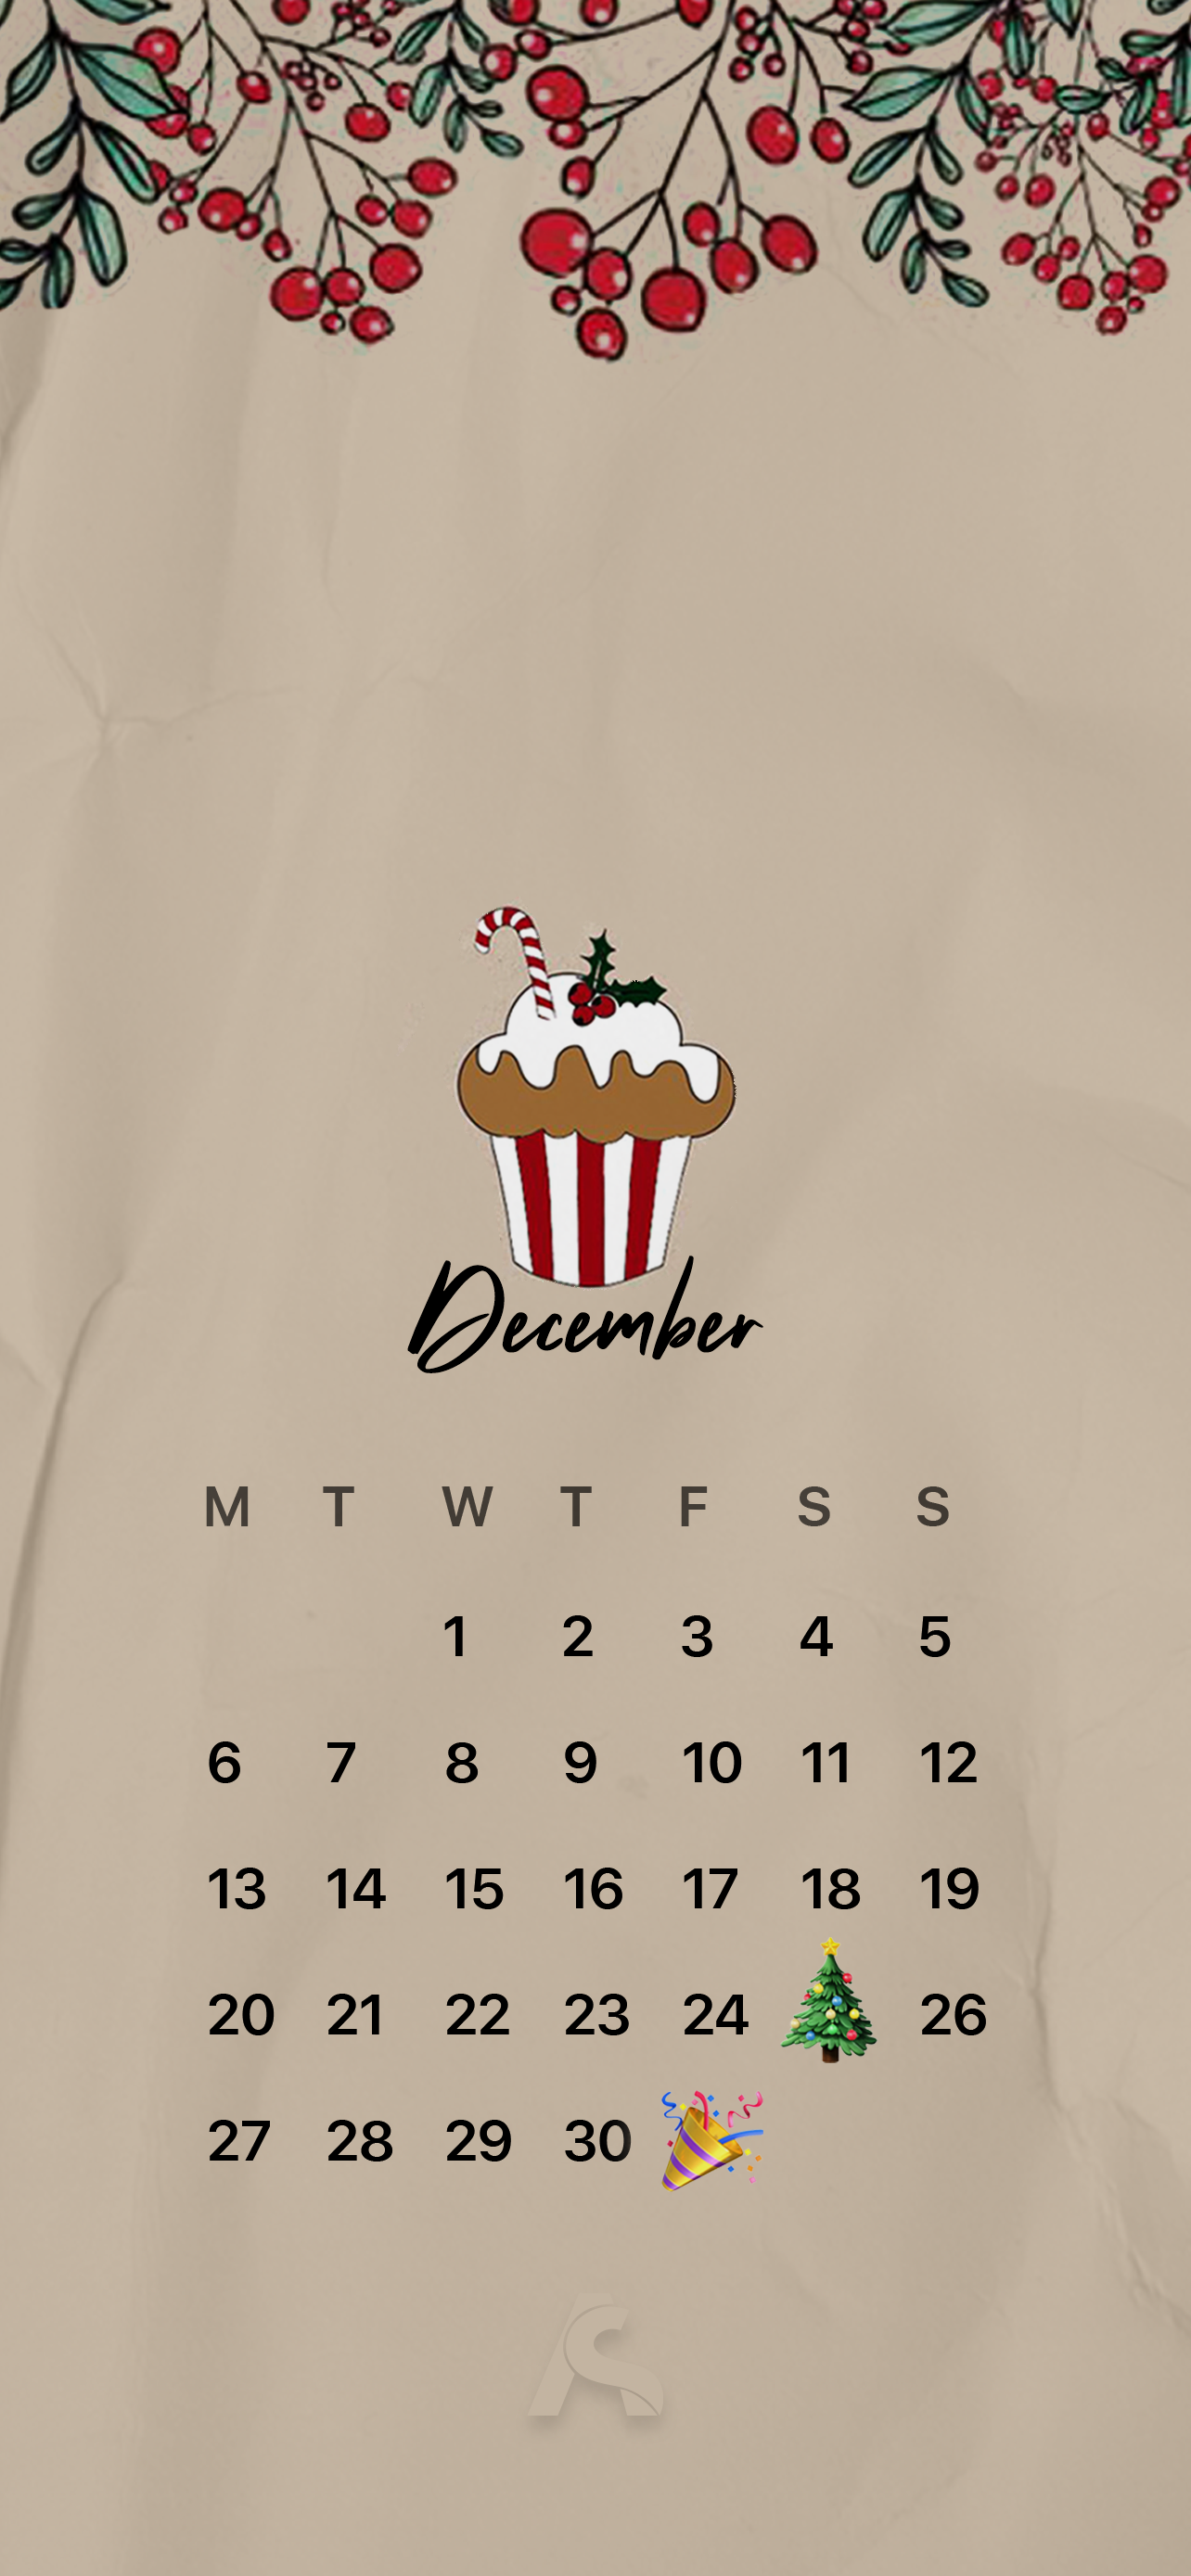 December apple iphone lock screen wallpaper free download